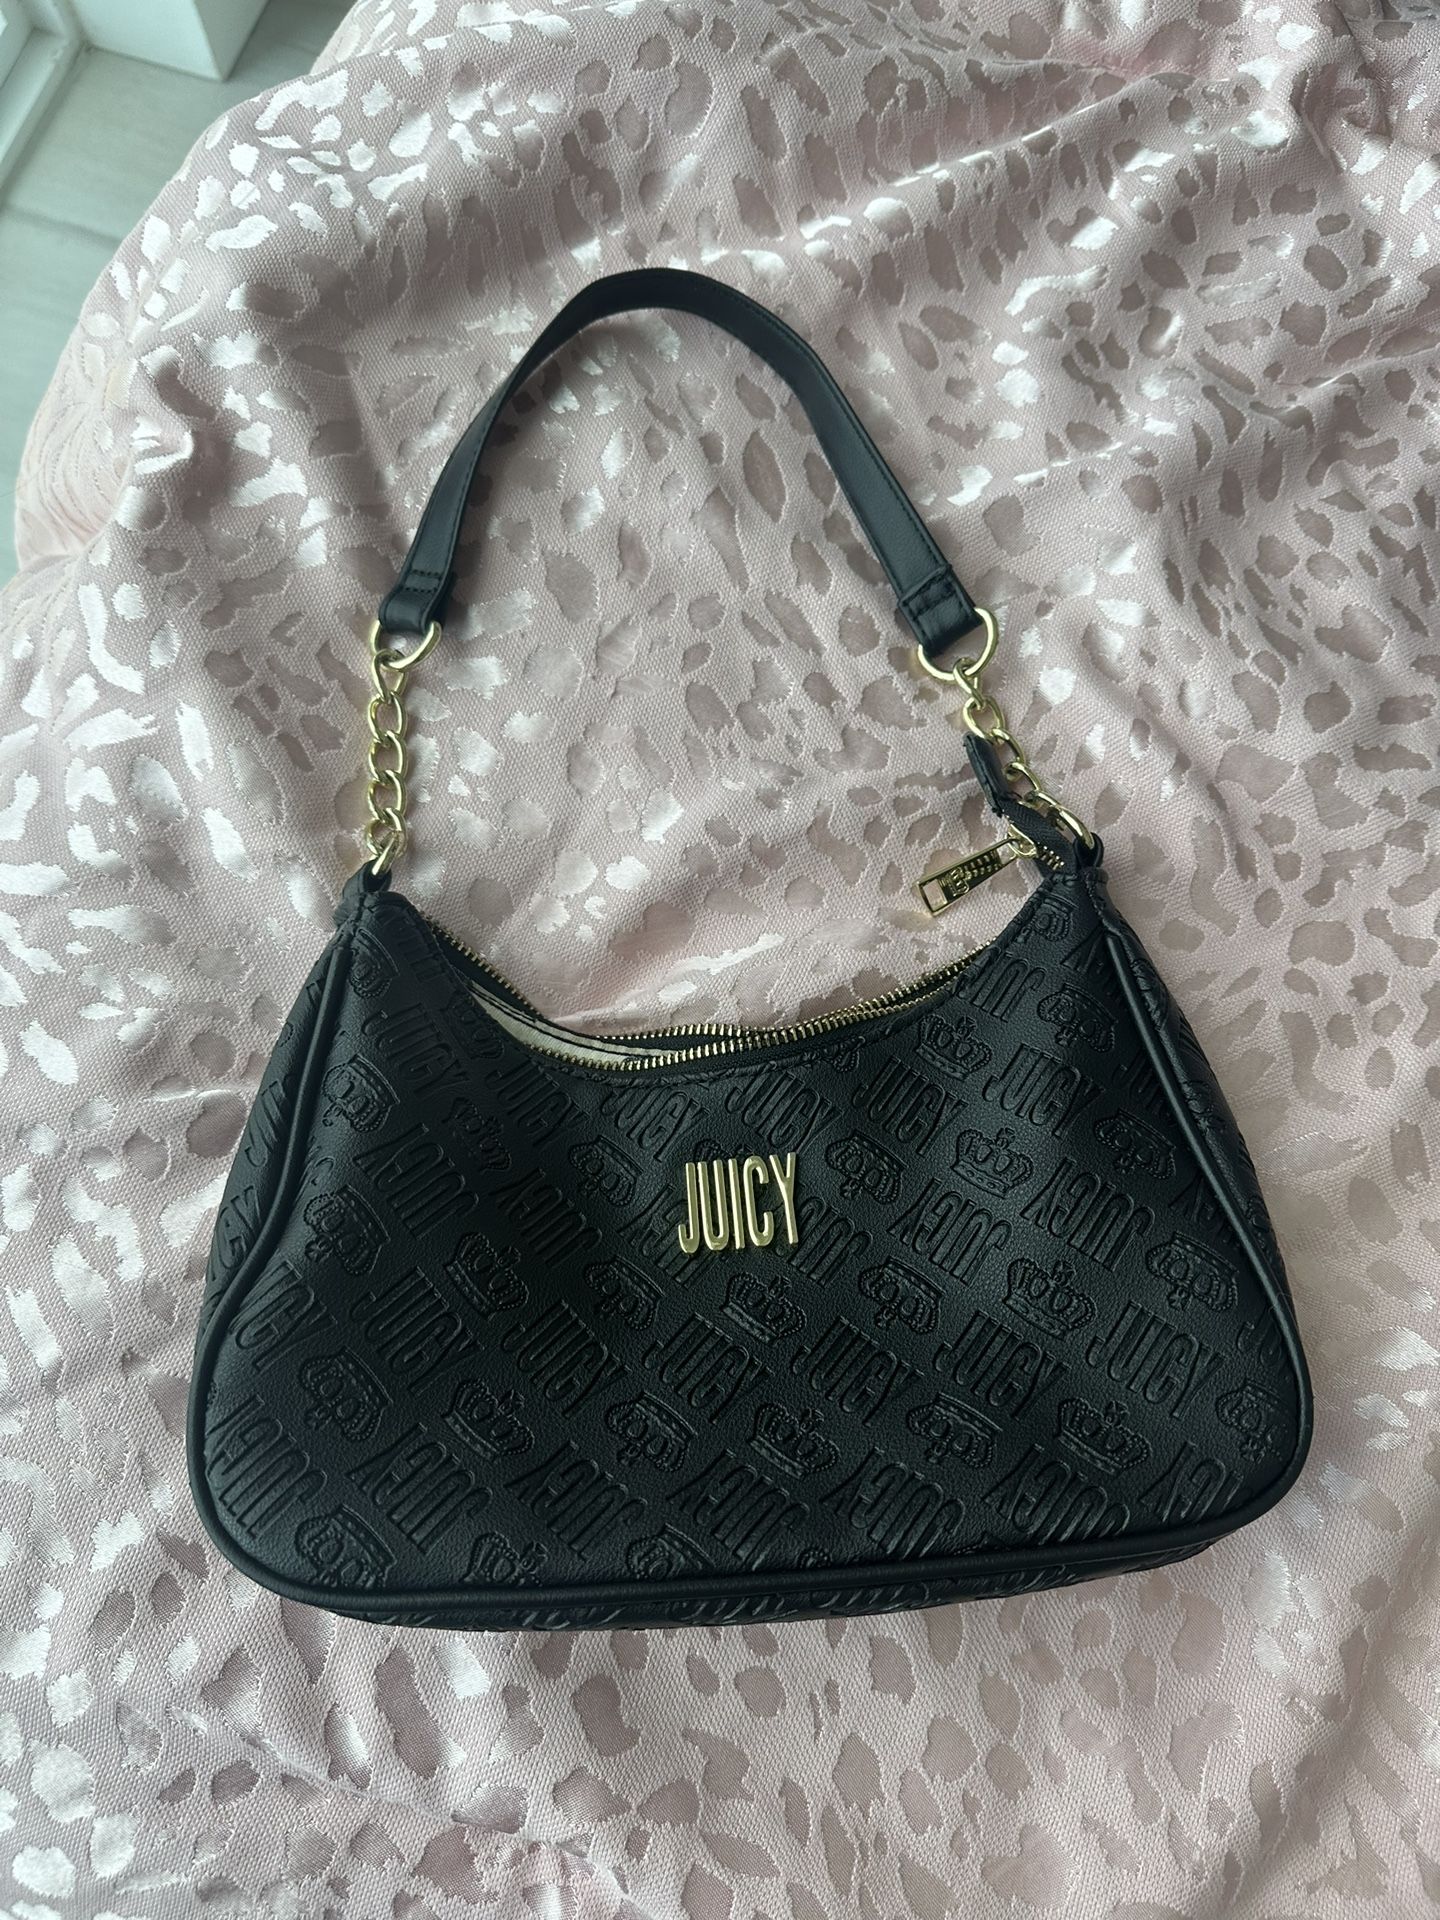 Juicy Couture JUICY purse